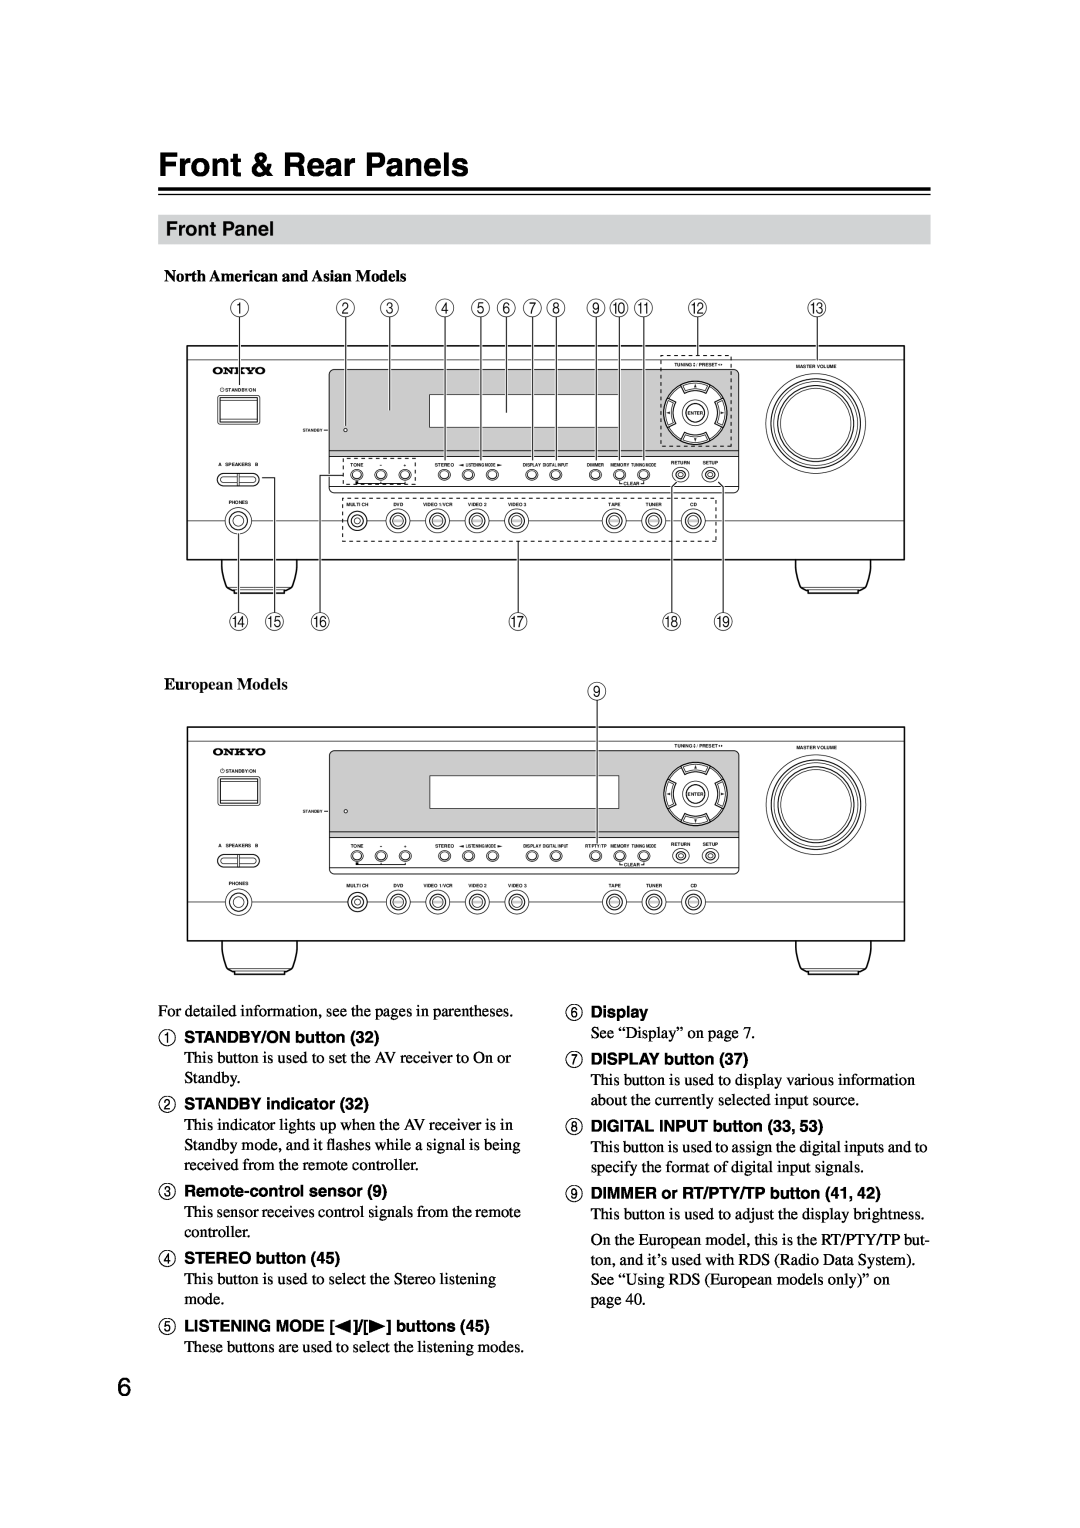 Onkyo TX-SR304 instruction manual Front & Rear Panels, Front Panel, 4 5 6 78 9JK, N O P 